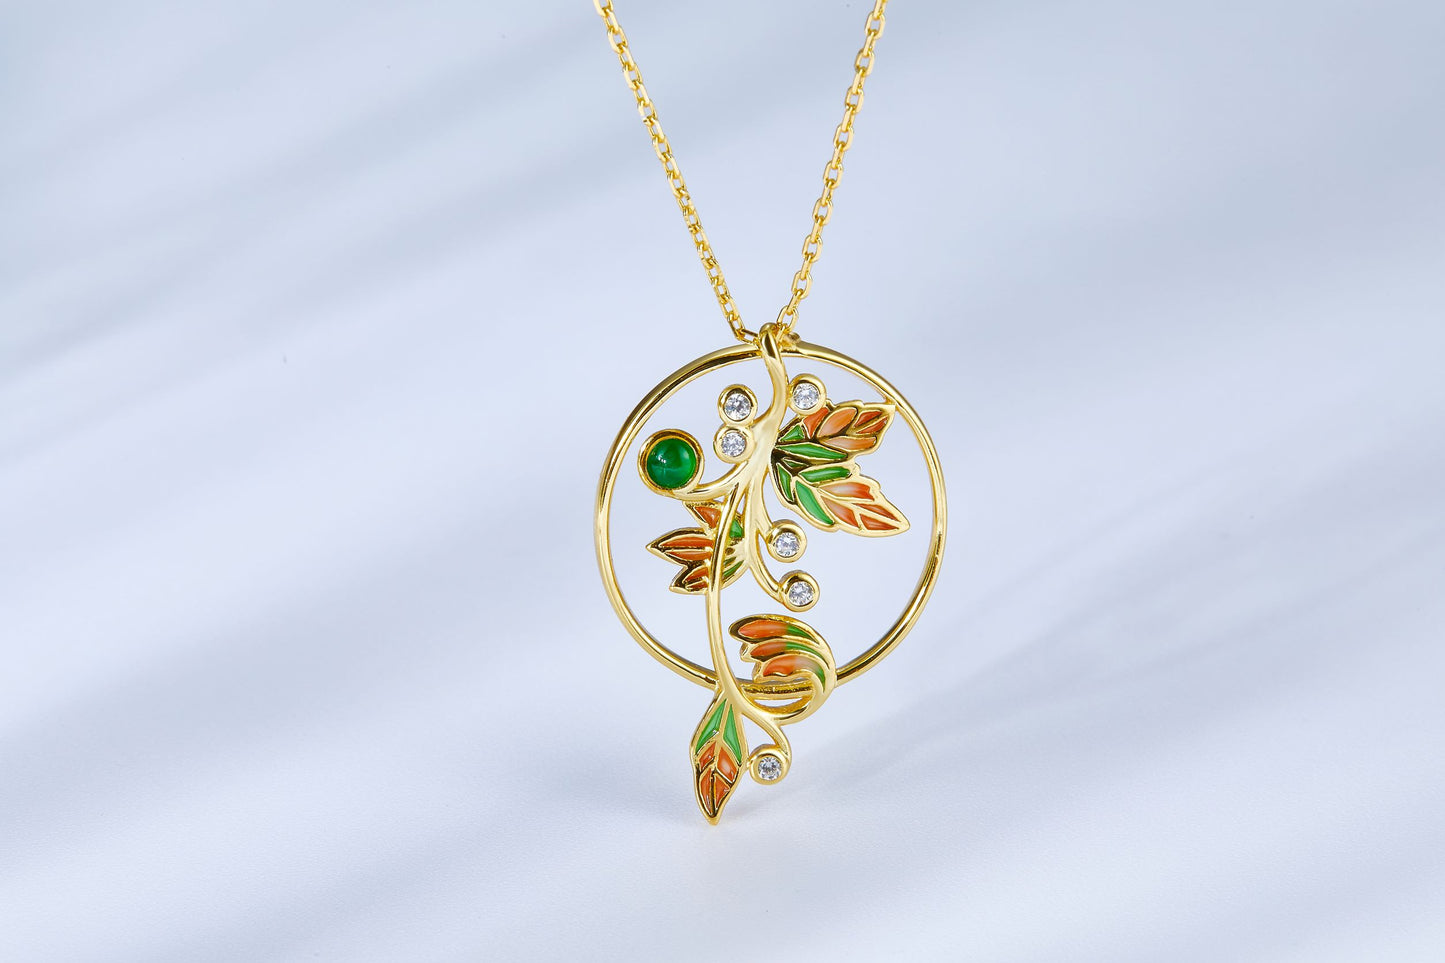 Golden Leaf Enamel with Emerald Necklace for Women